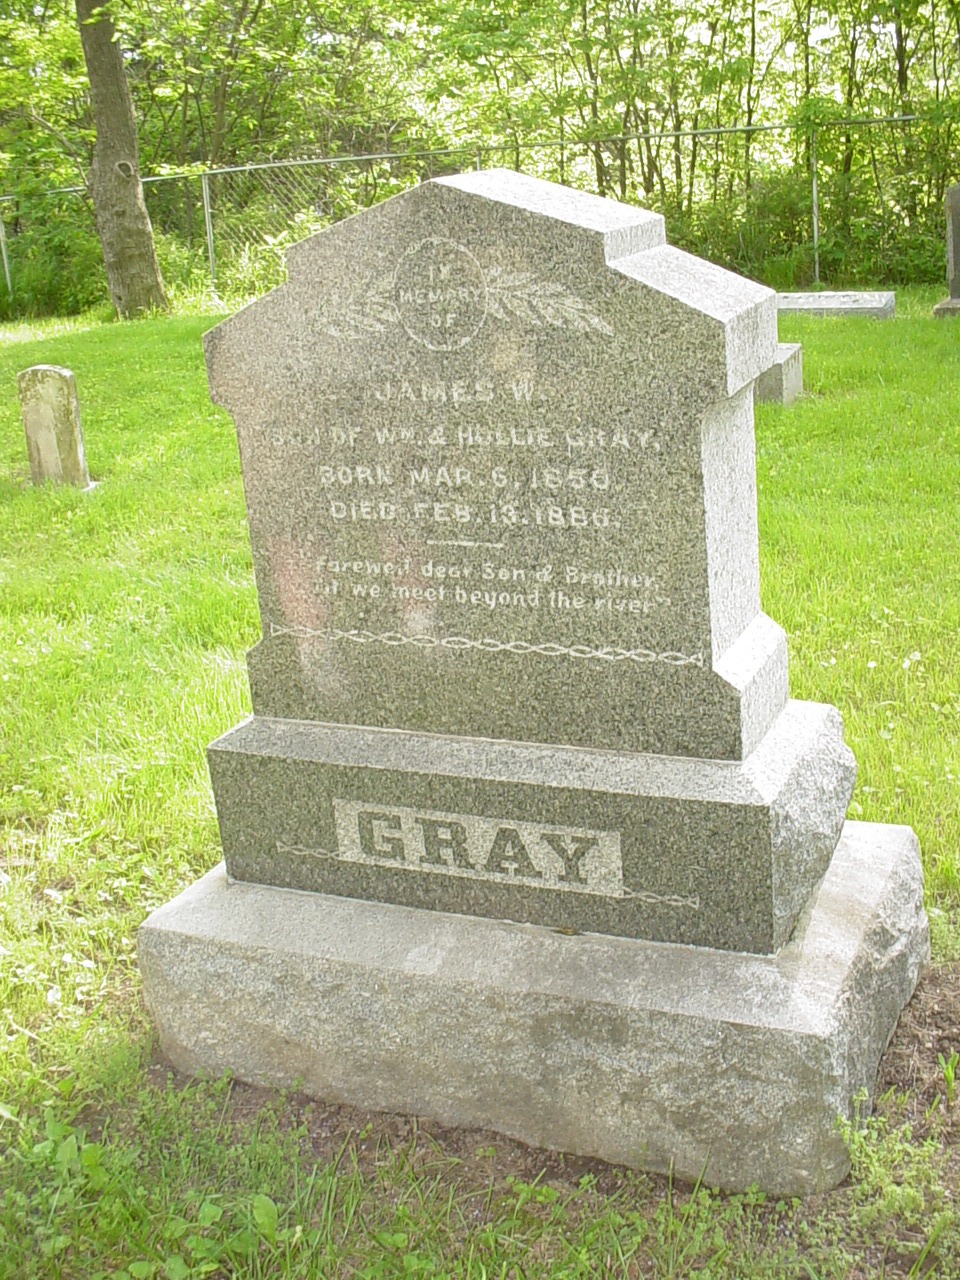  James W. Gray